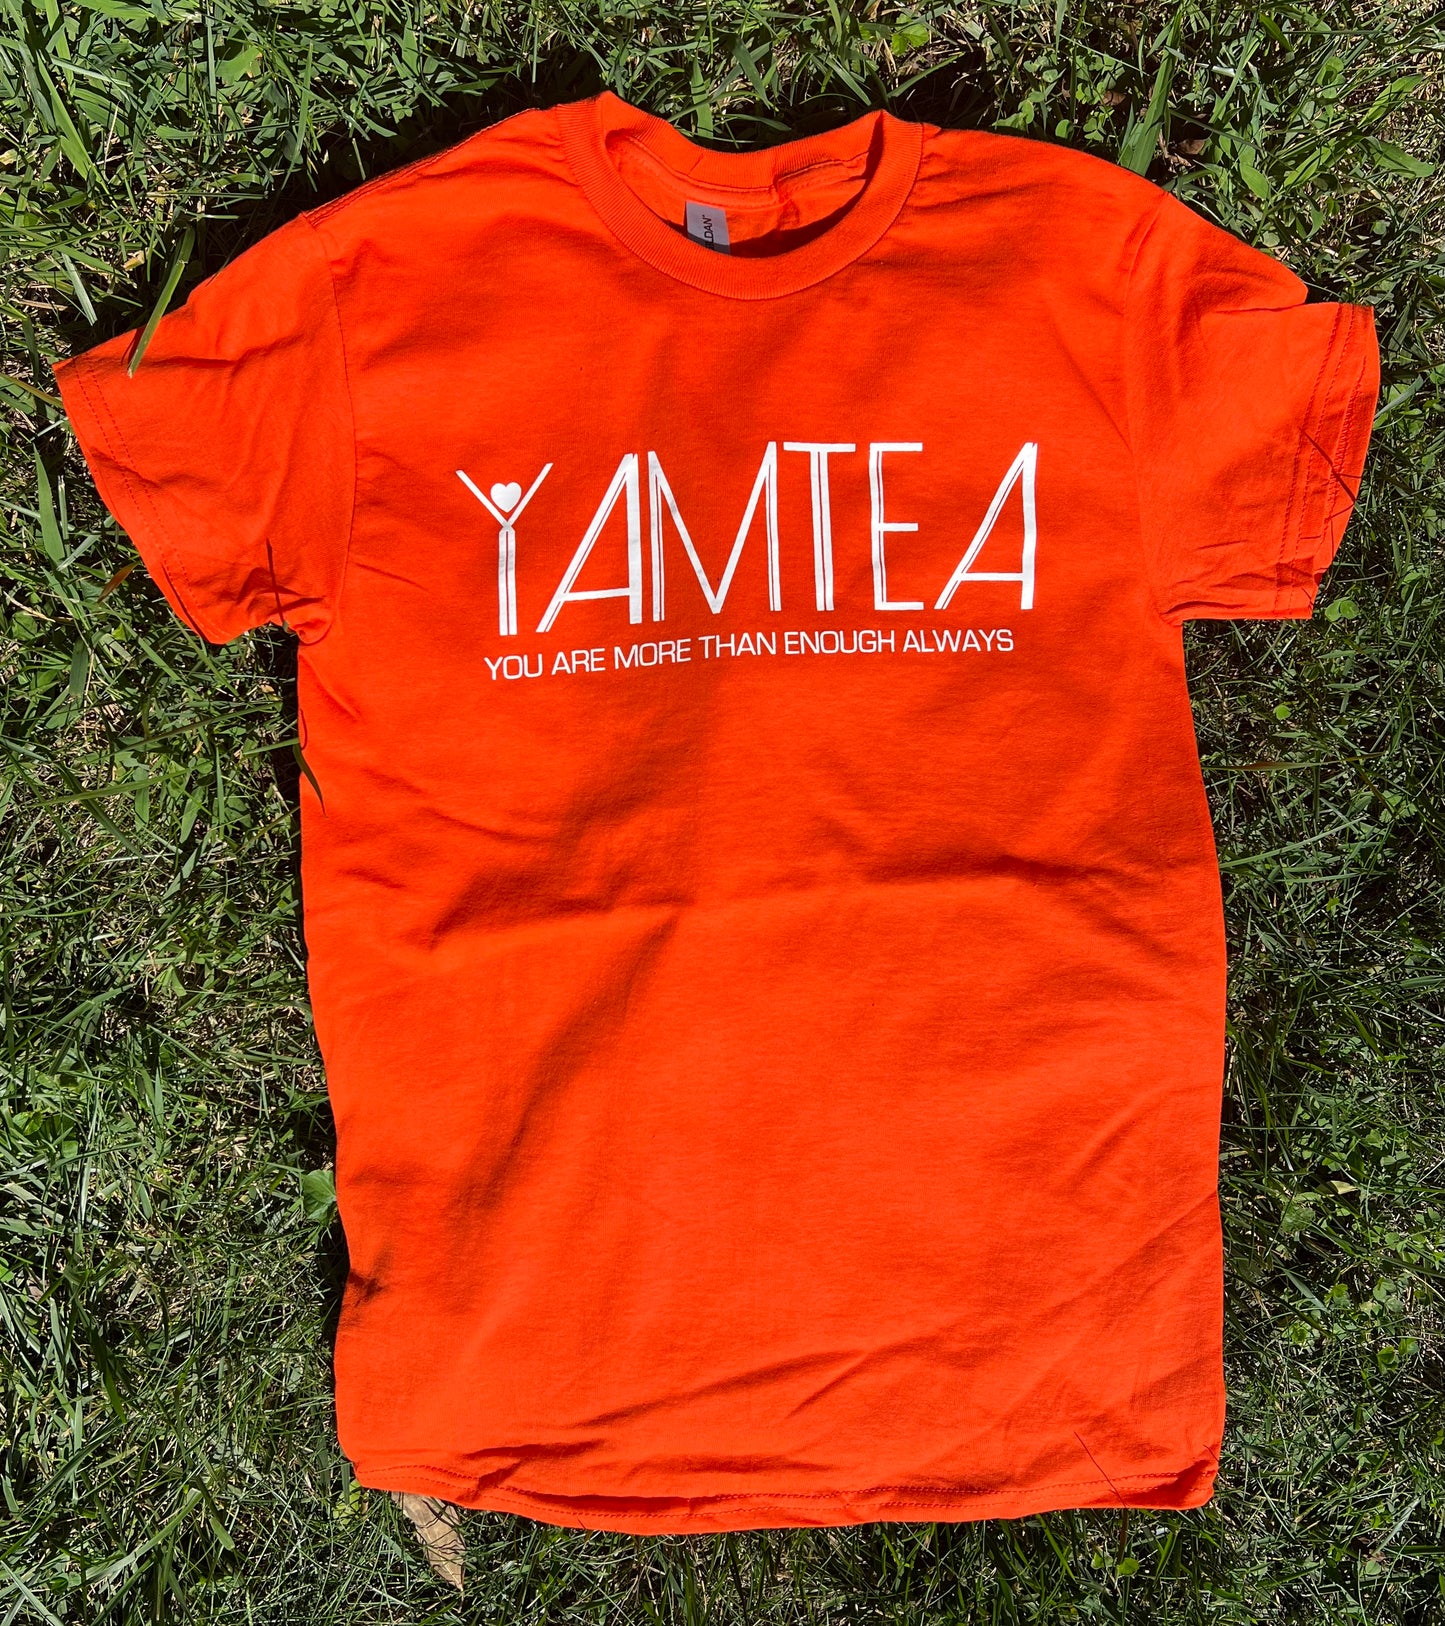 YamTea T-Shirts